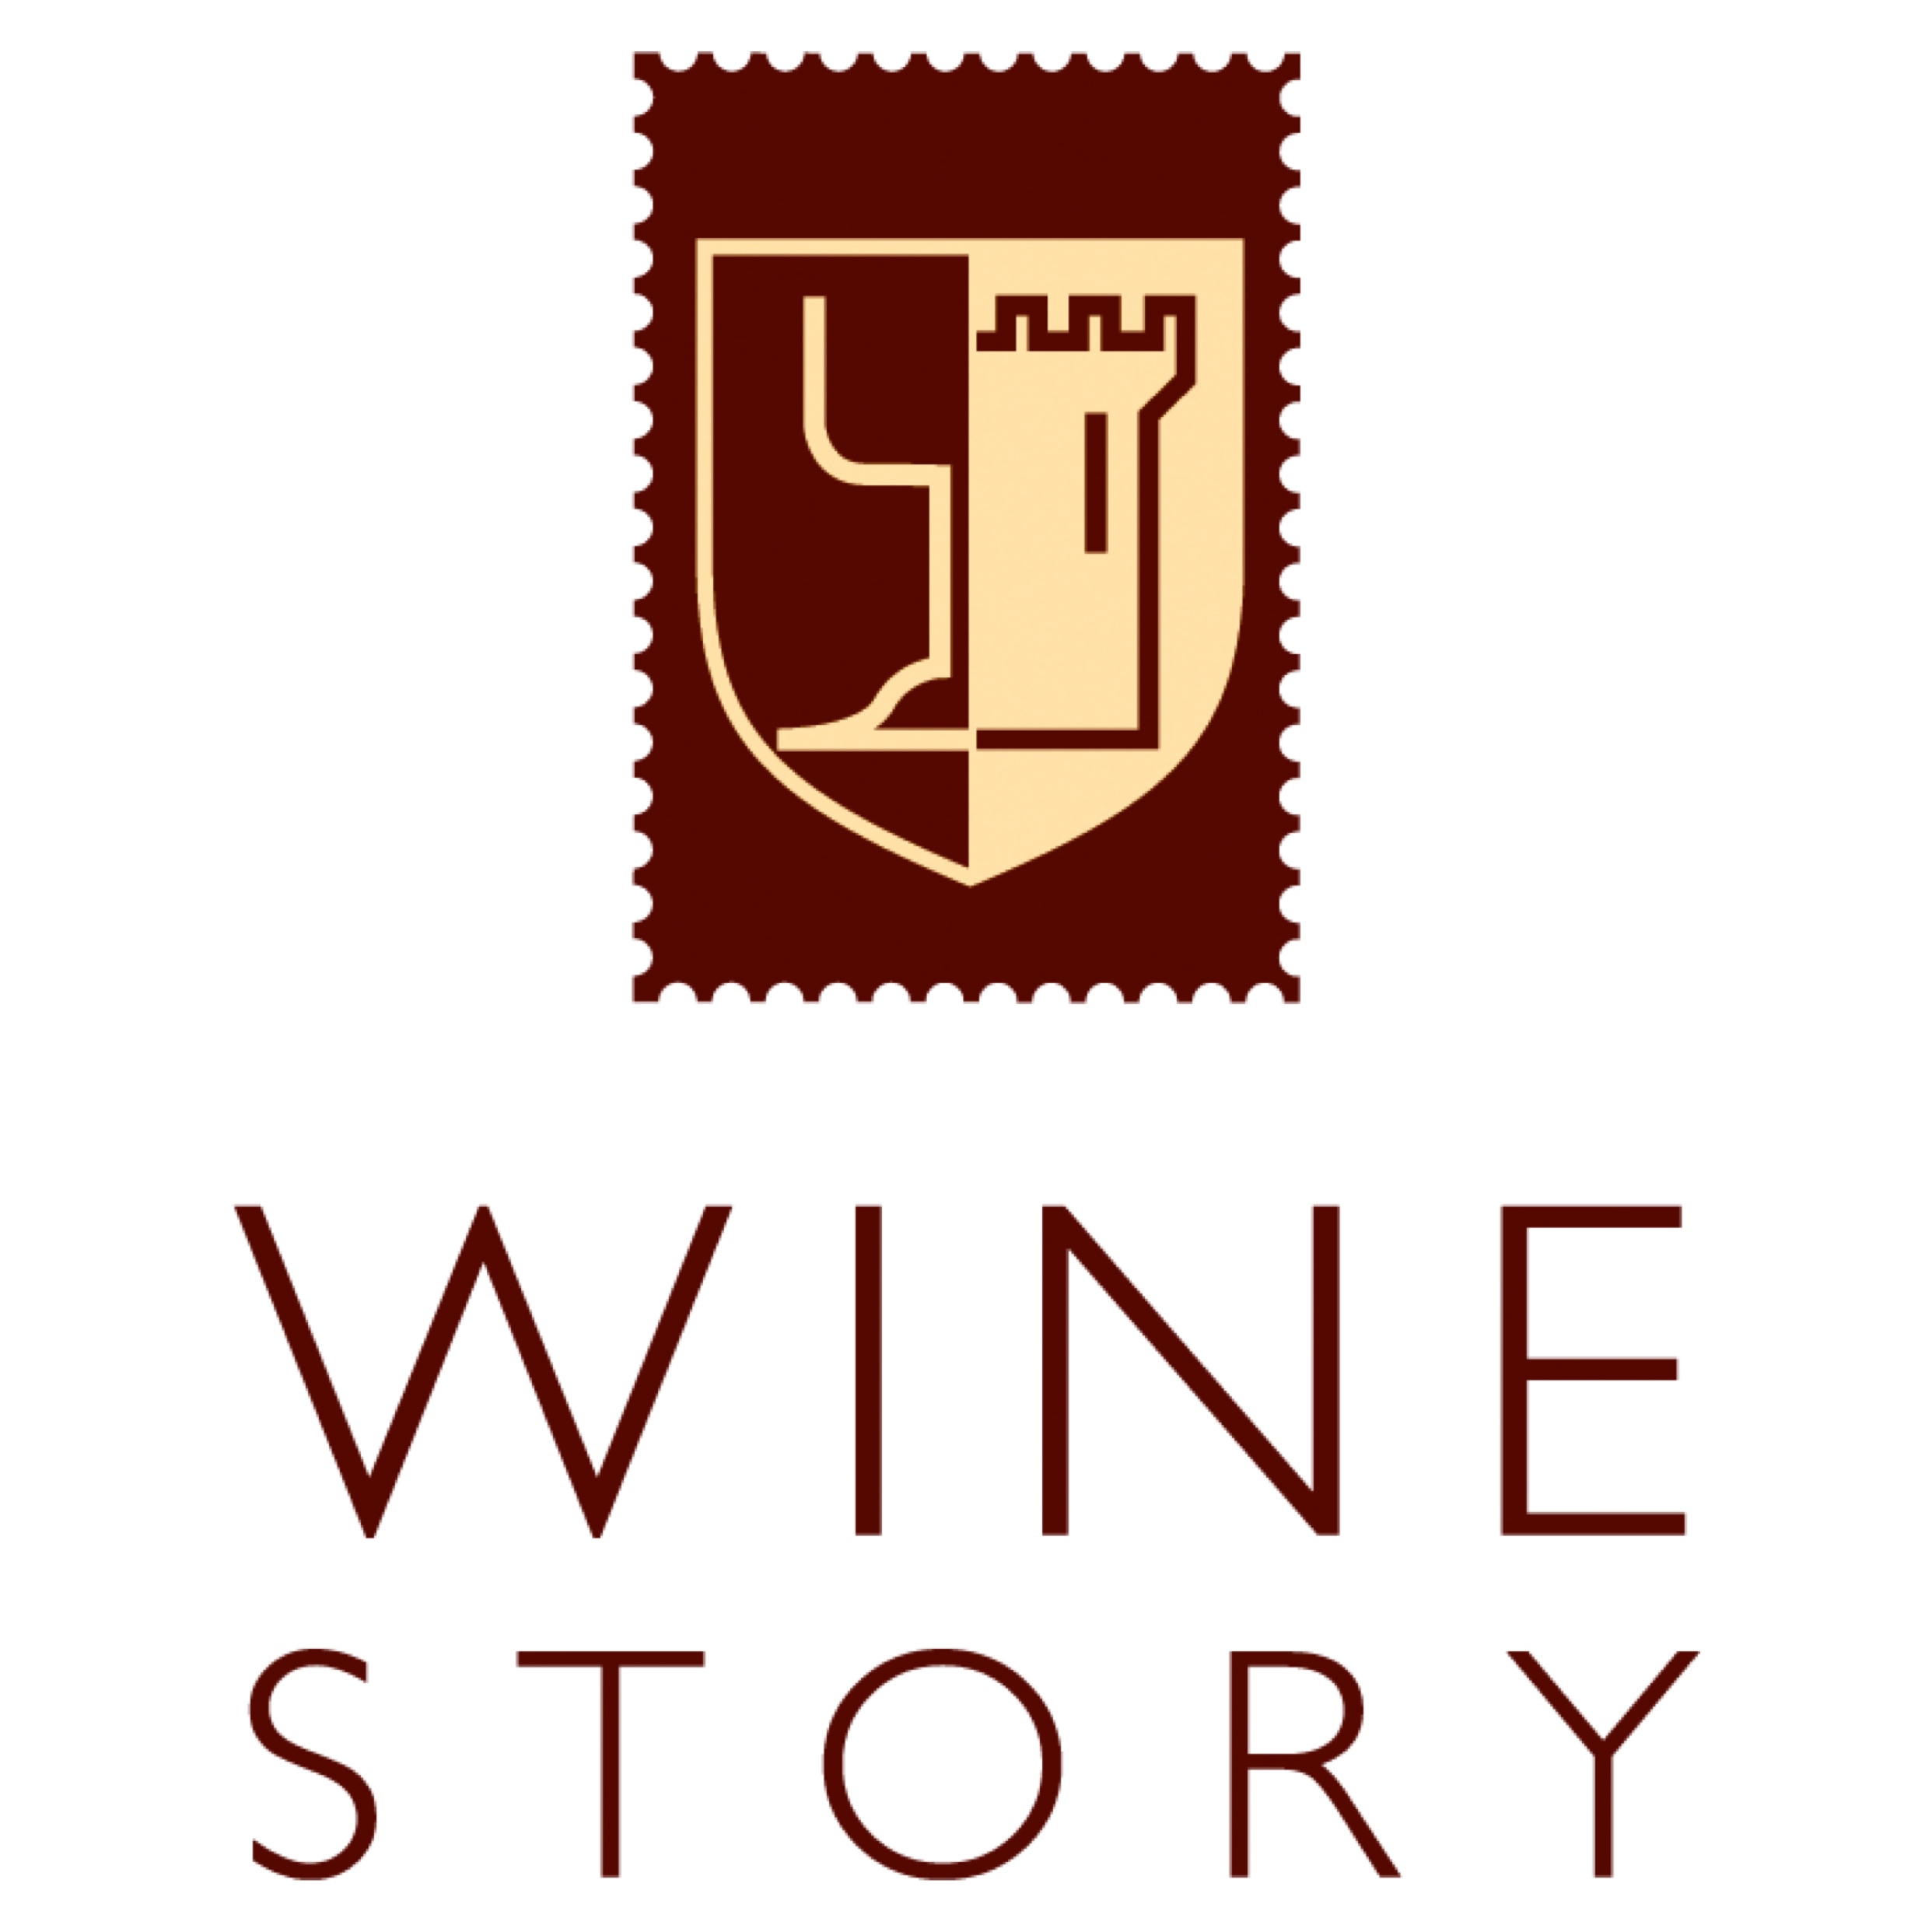 Wine Story